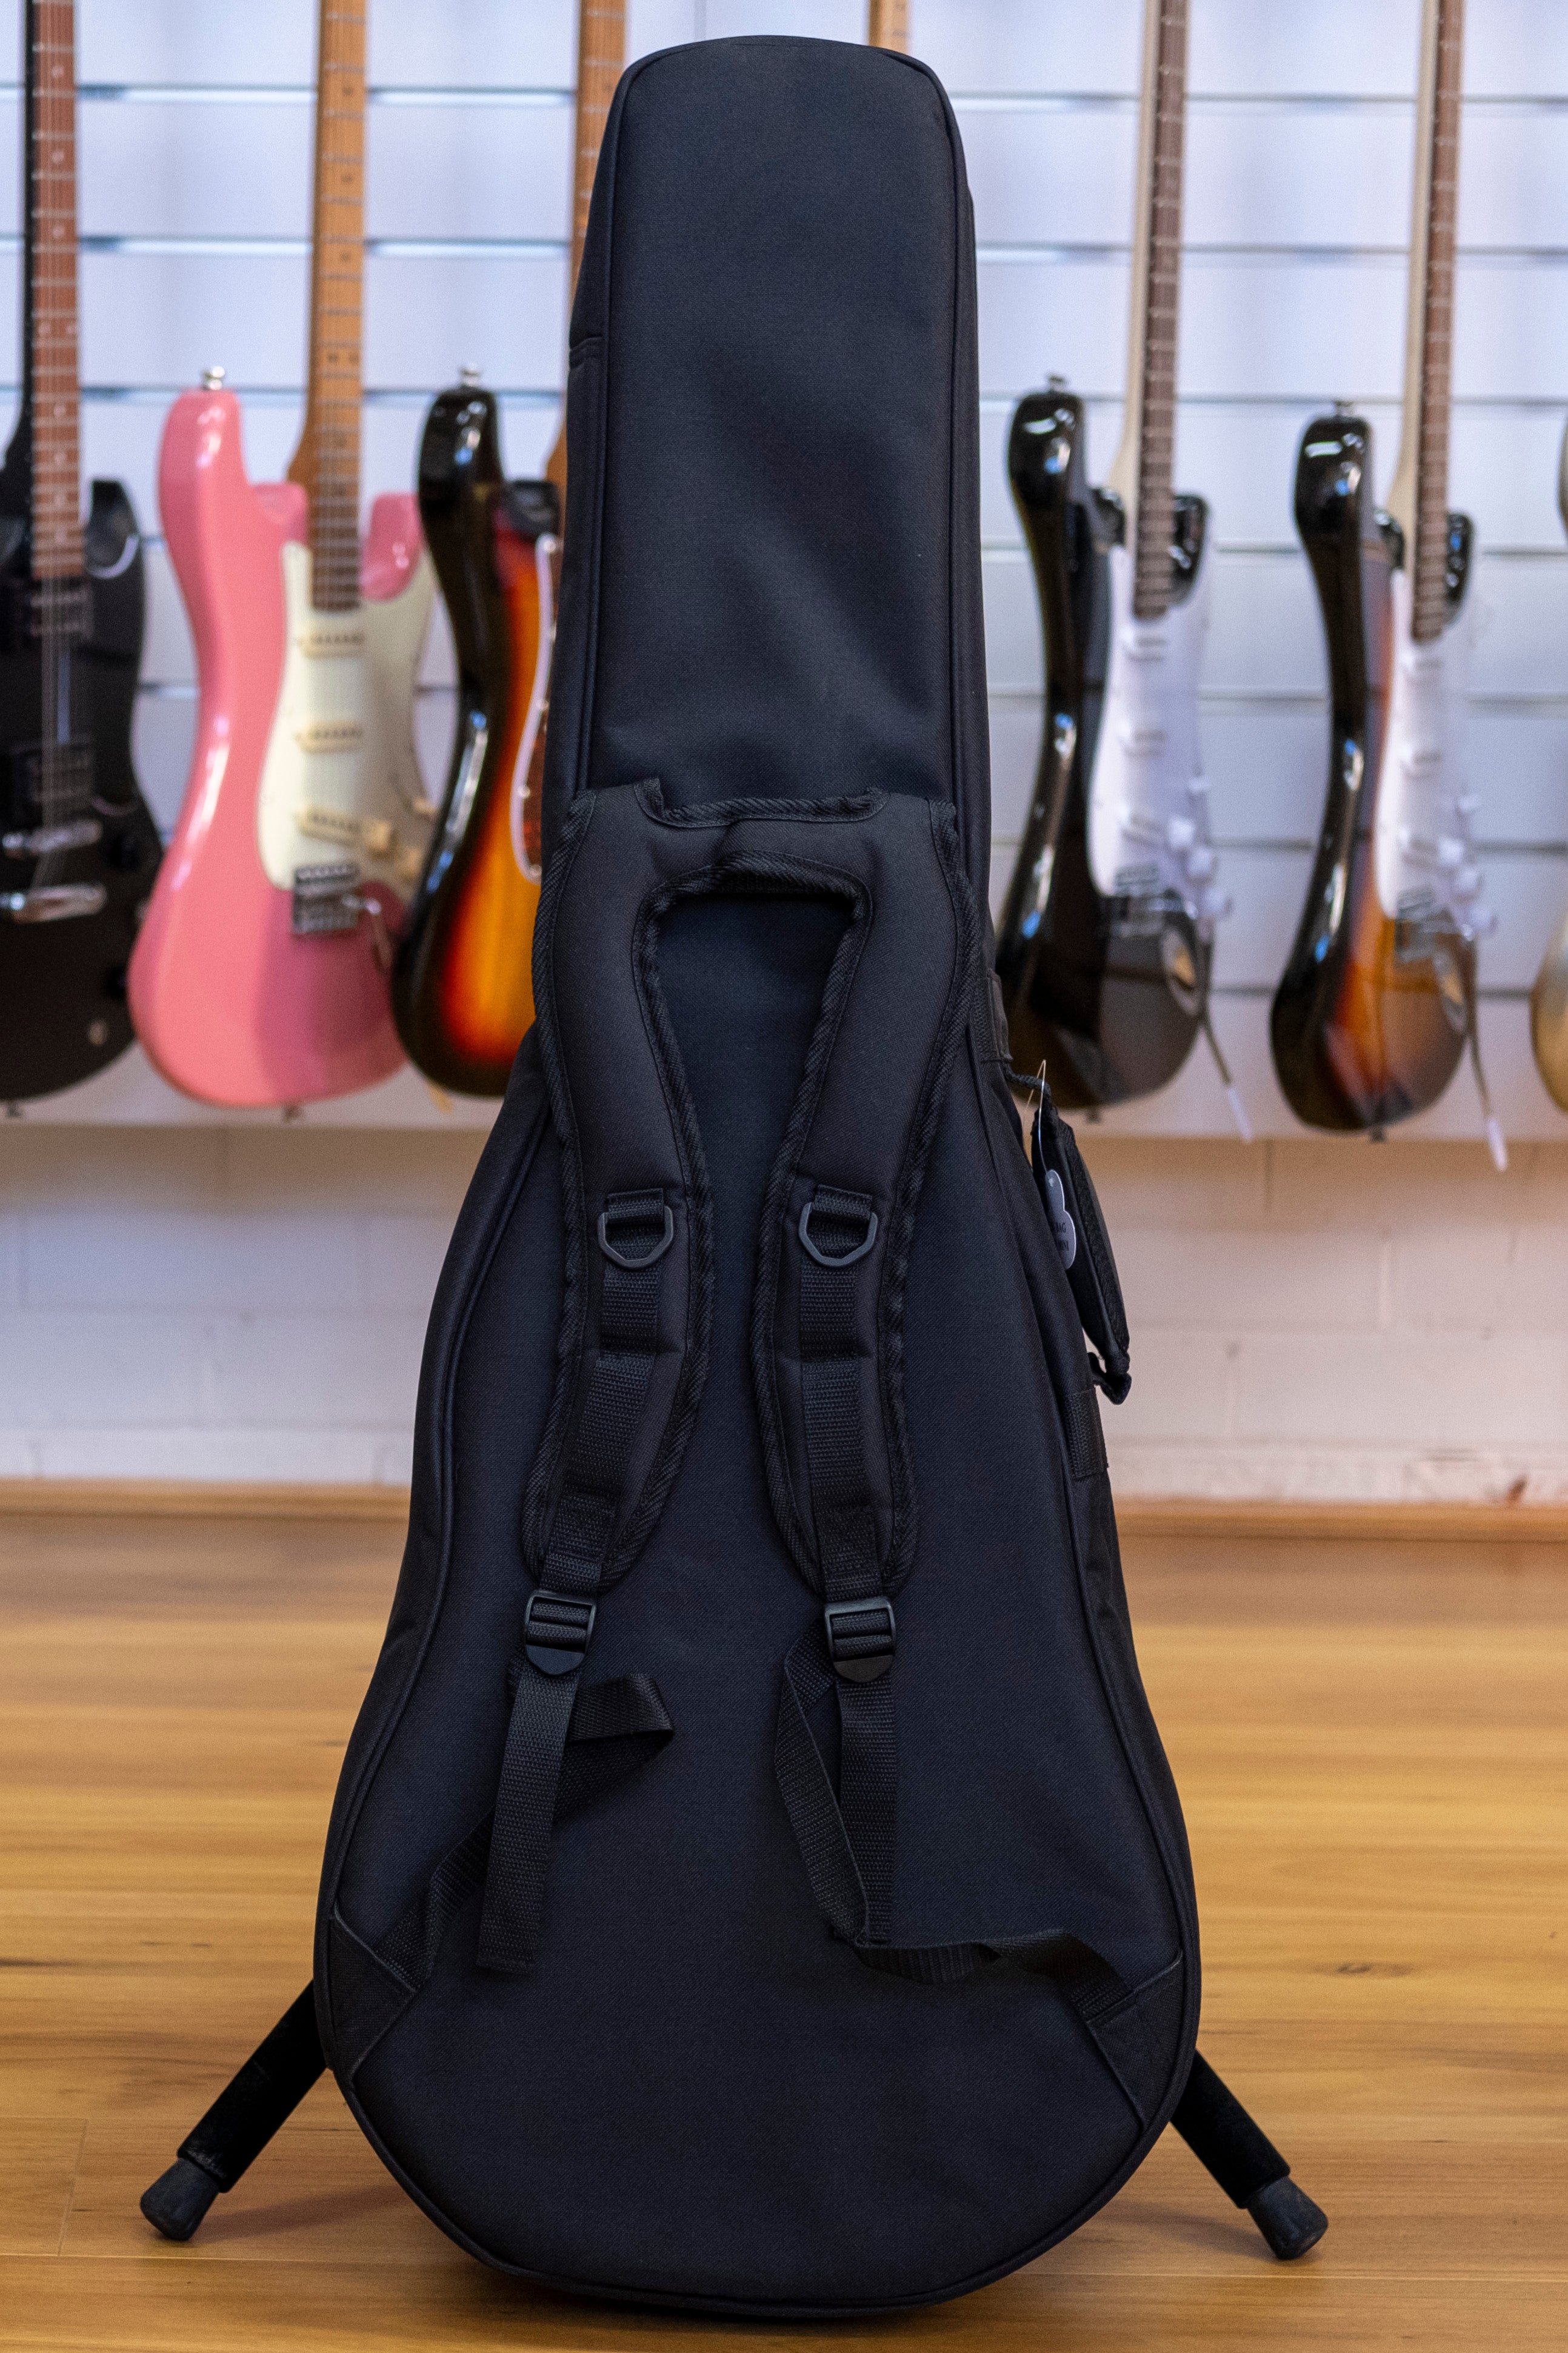 Takamine Taka-Mini 3/4 Size Acoustic Electric Guitar with Bag